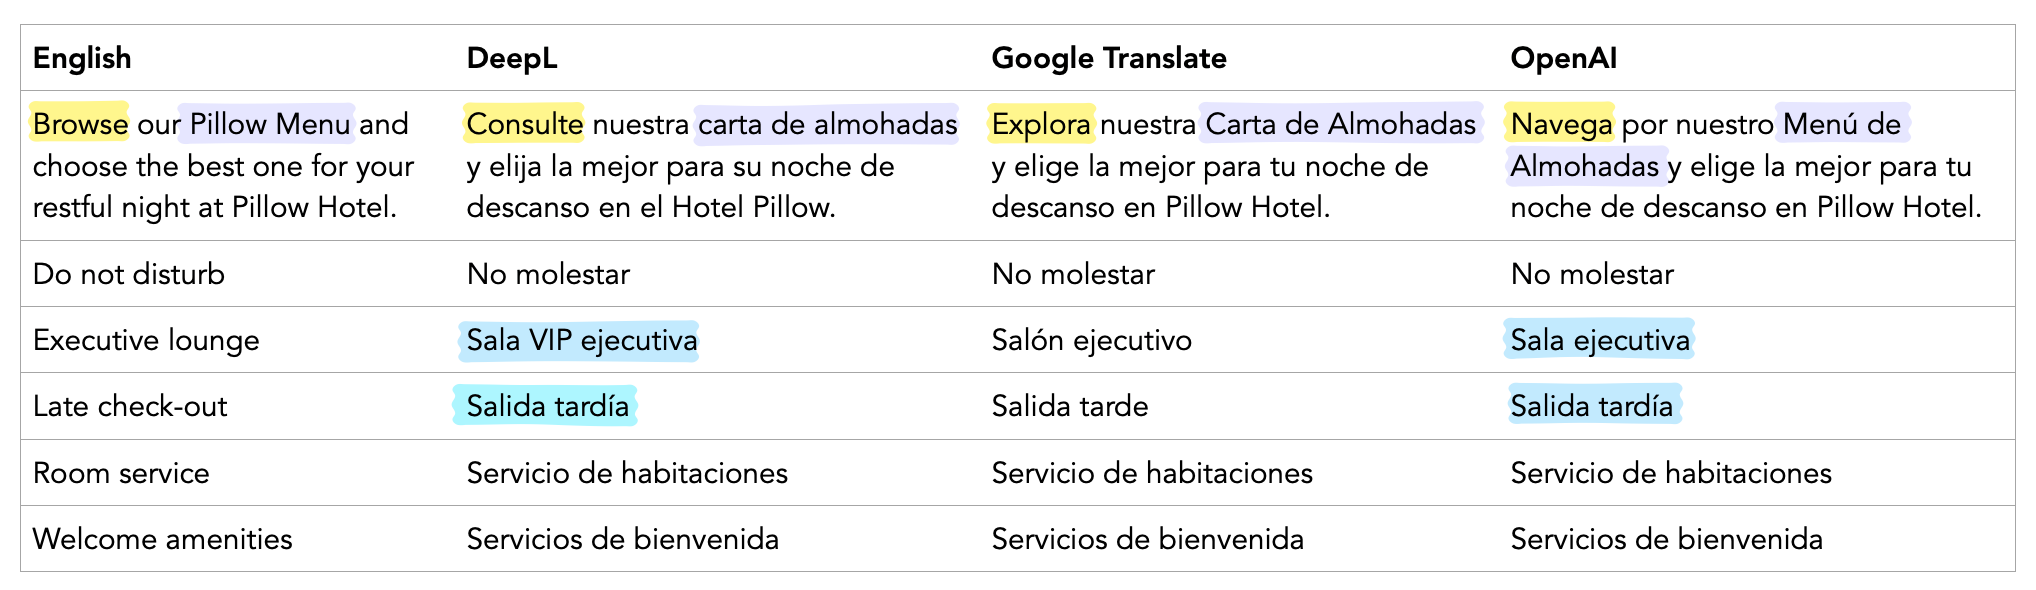 Comparison of translations to Spanish